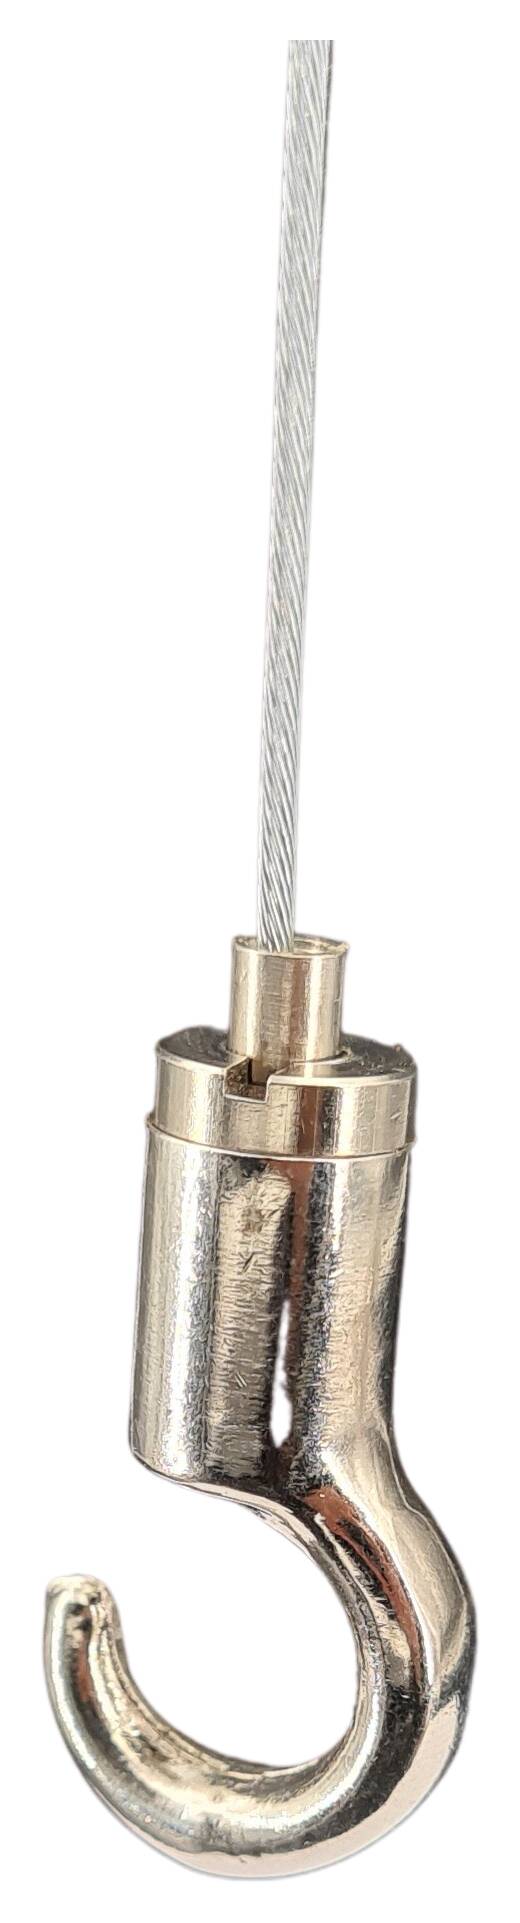 brass cableblocker with hook 10x30 hook 17,0/10,5 mm nickel